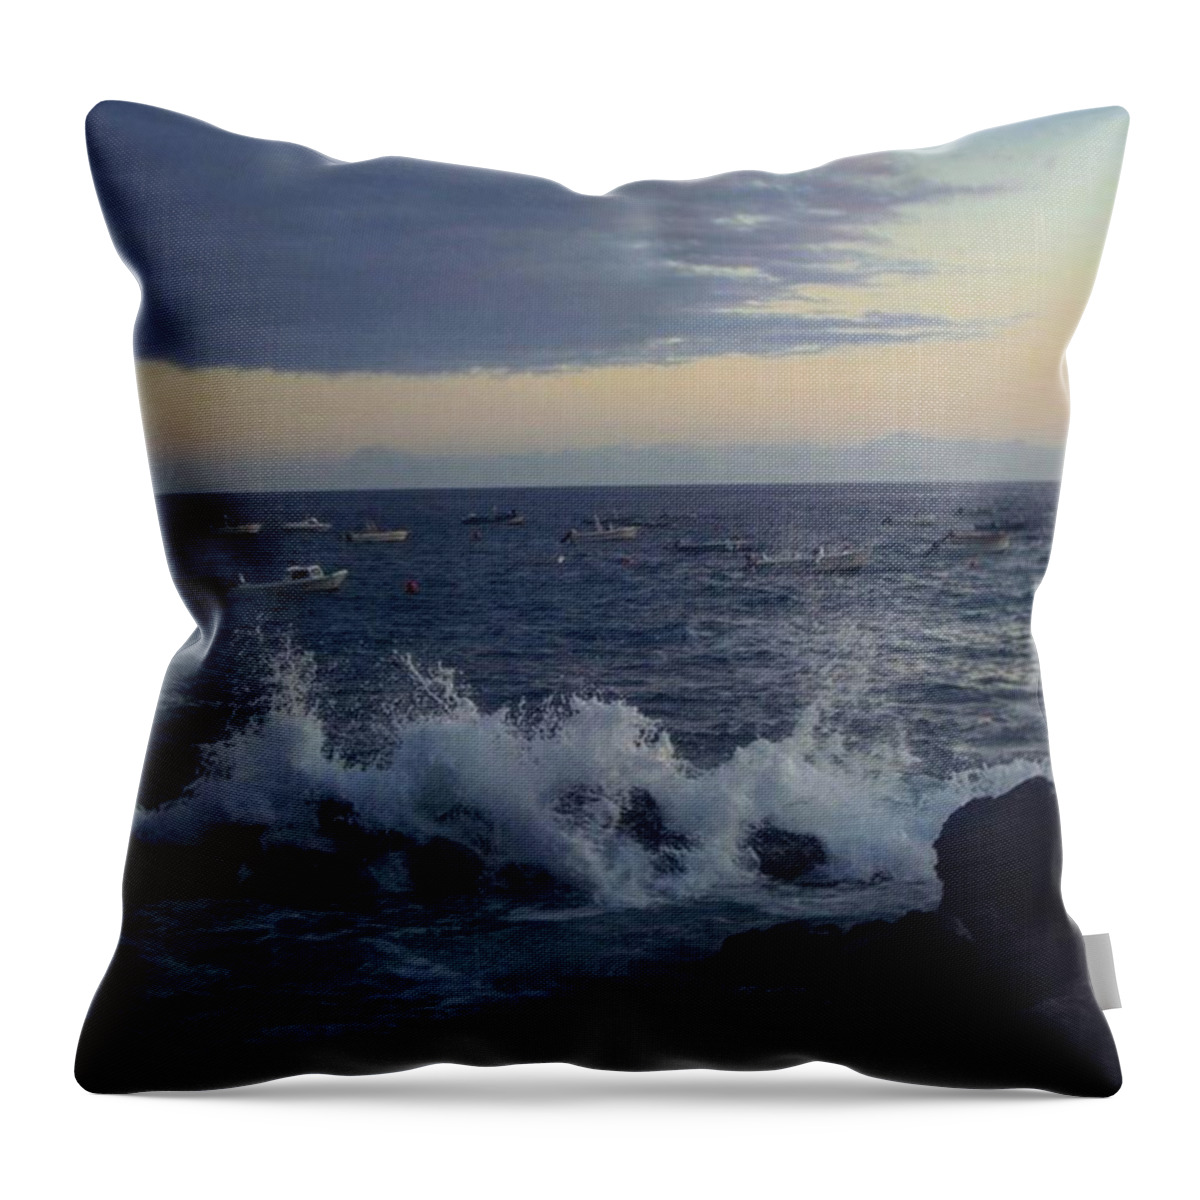 Beautiful Throw Pillow featuring the photograph Coast of La Palma by Mari Sa